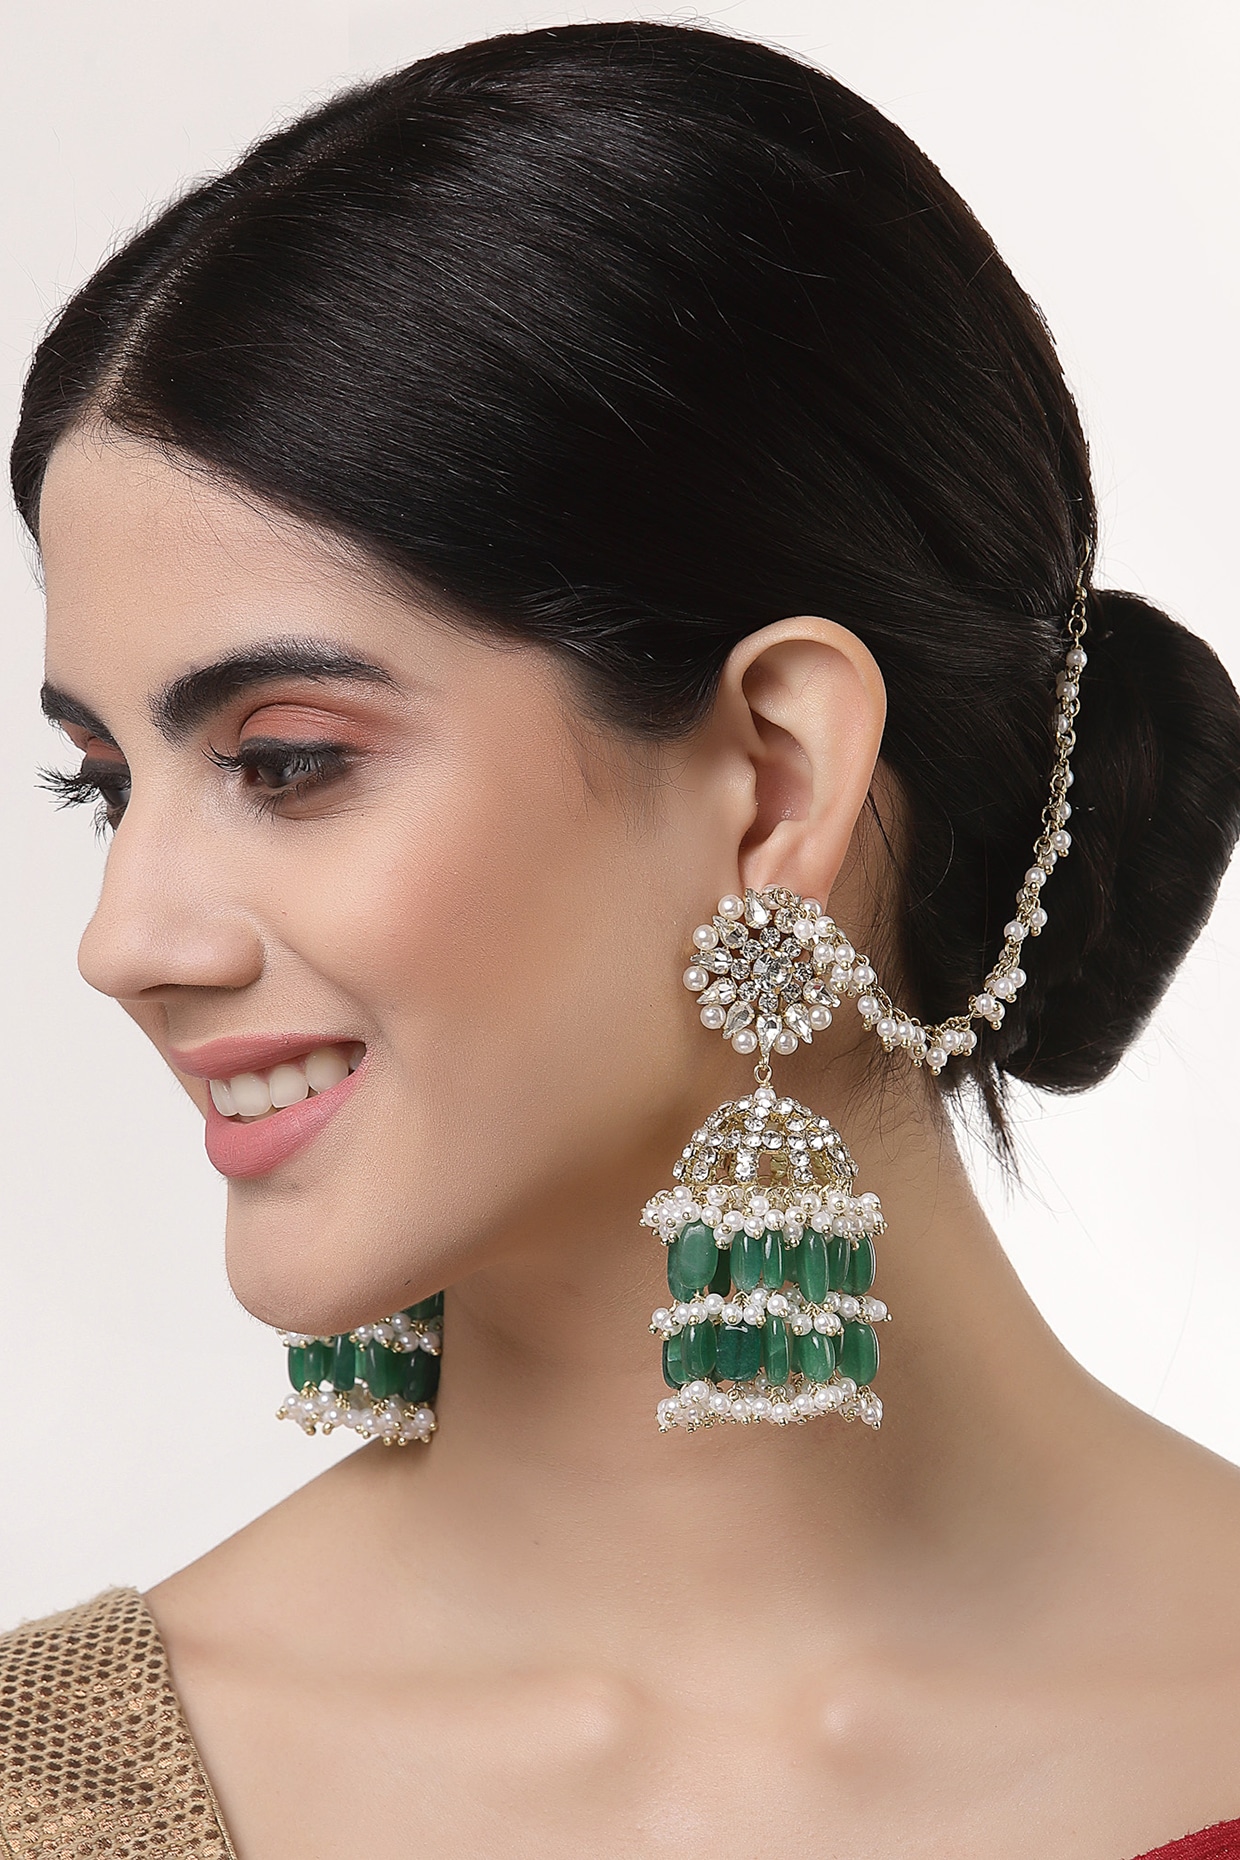 Buy Efulgenz Women's Crystal Jhumka Earrings, Green at Amazon.in